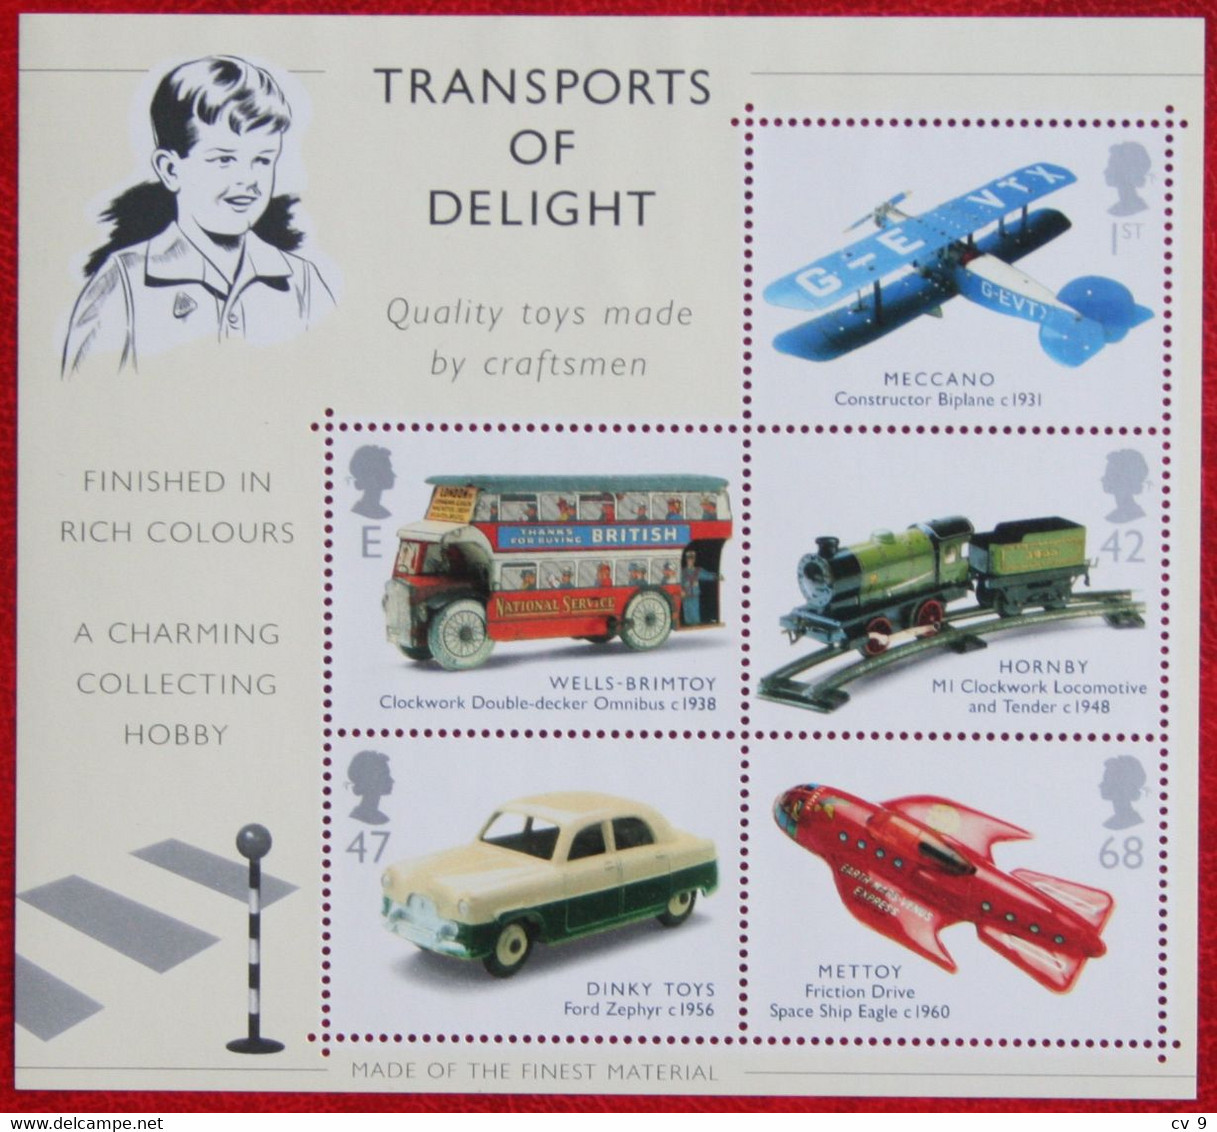 Classic Transport Toys Dinky (Mi 2152-2156 Block 16) 2003 POSTFRIS MNH ** ENGLAND GRANDE-BRETAGNE GB GREAT BRITAIN - Blocks & Miniature Sheets